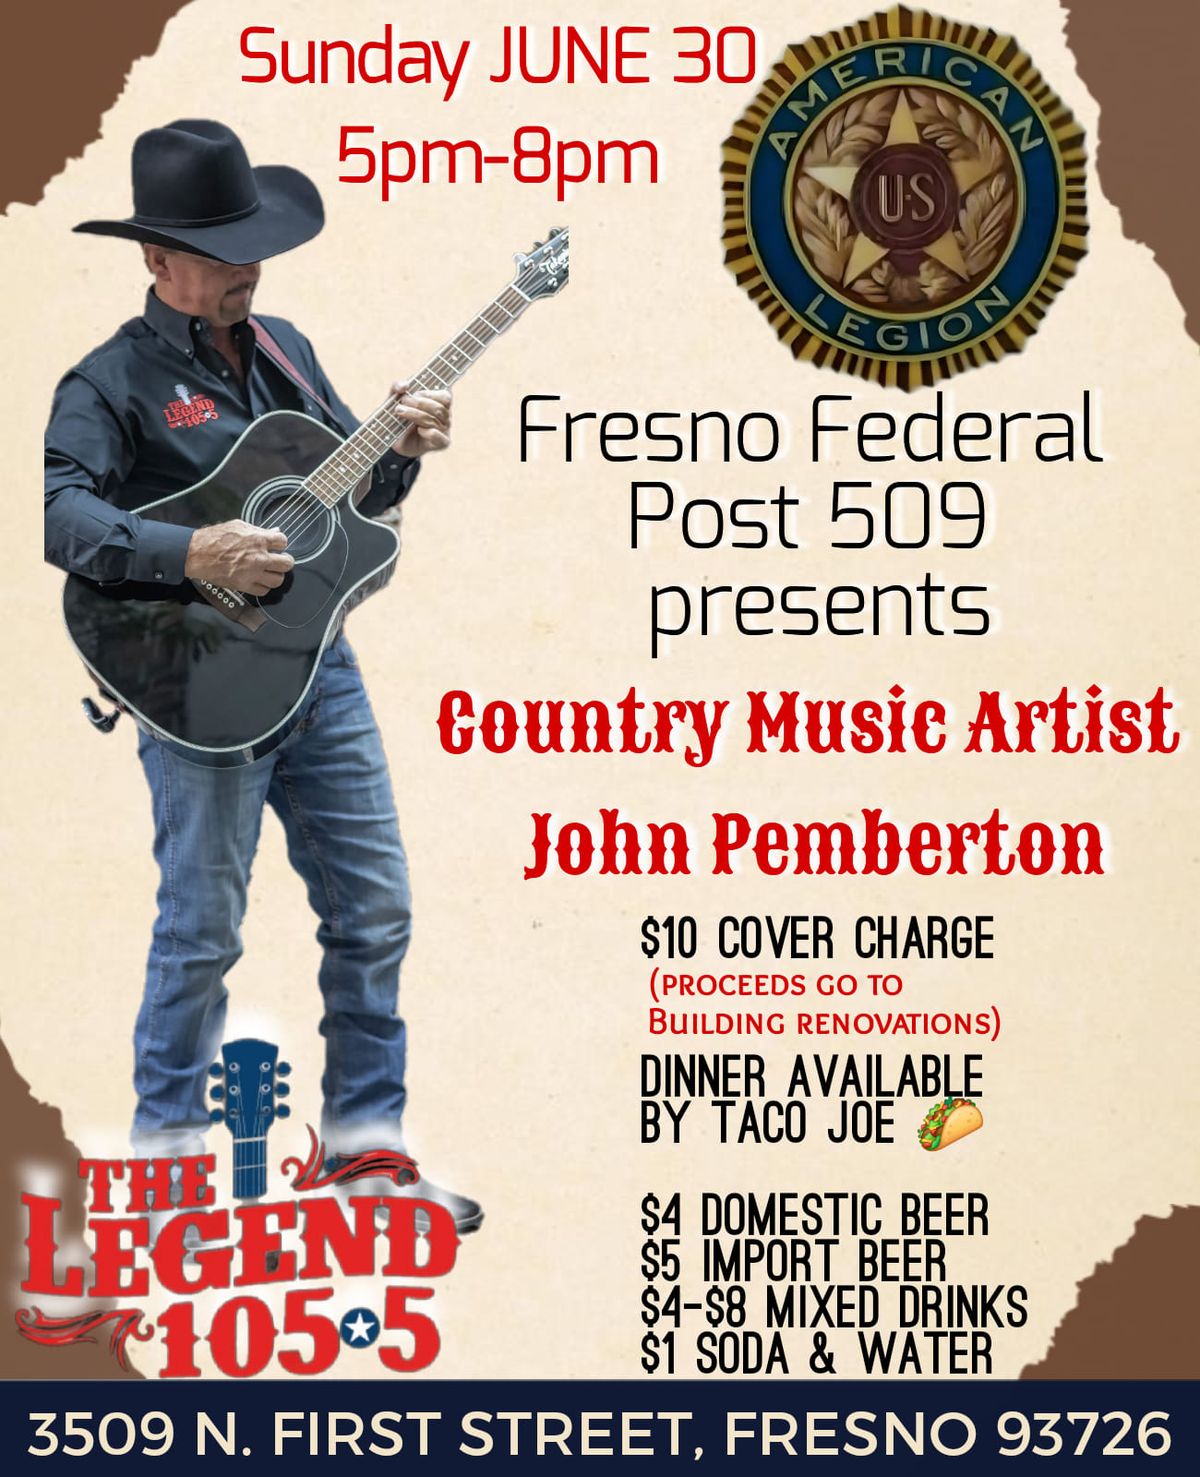 FRESNO FEDERAL POST 509 & THE LEGEND 105.5 PRESENT COUNTRY MUSIC ARTIST JOHN PEMBERTON 